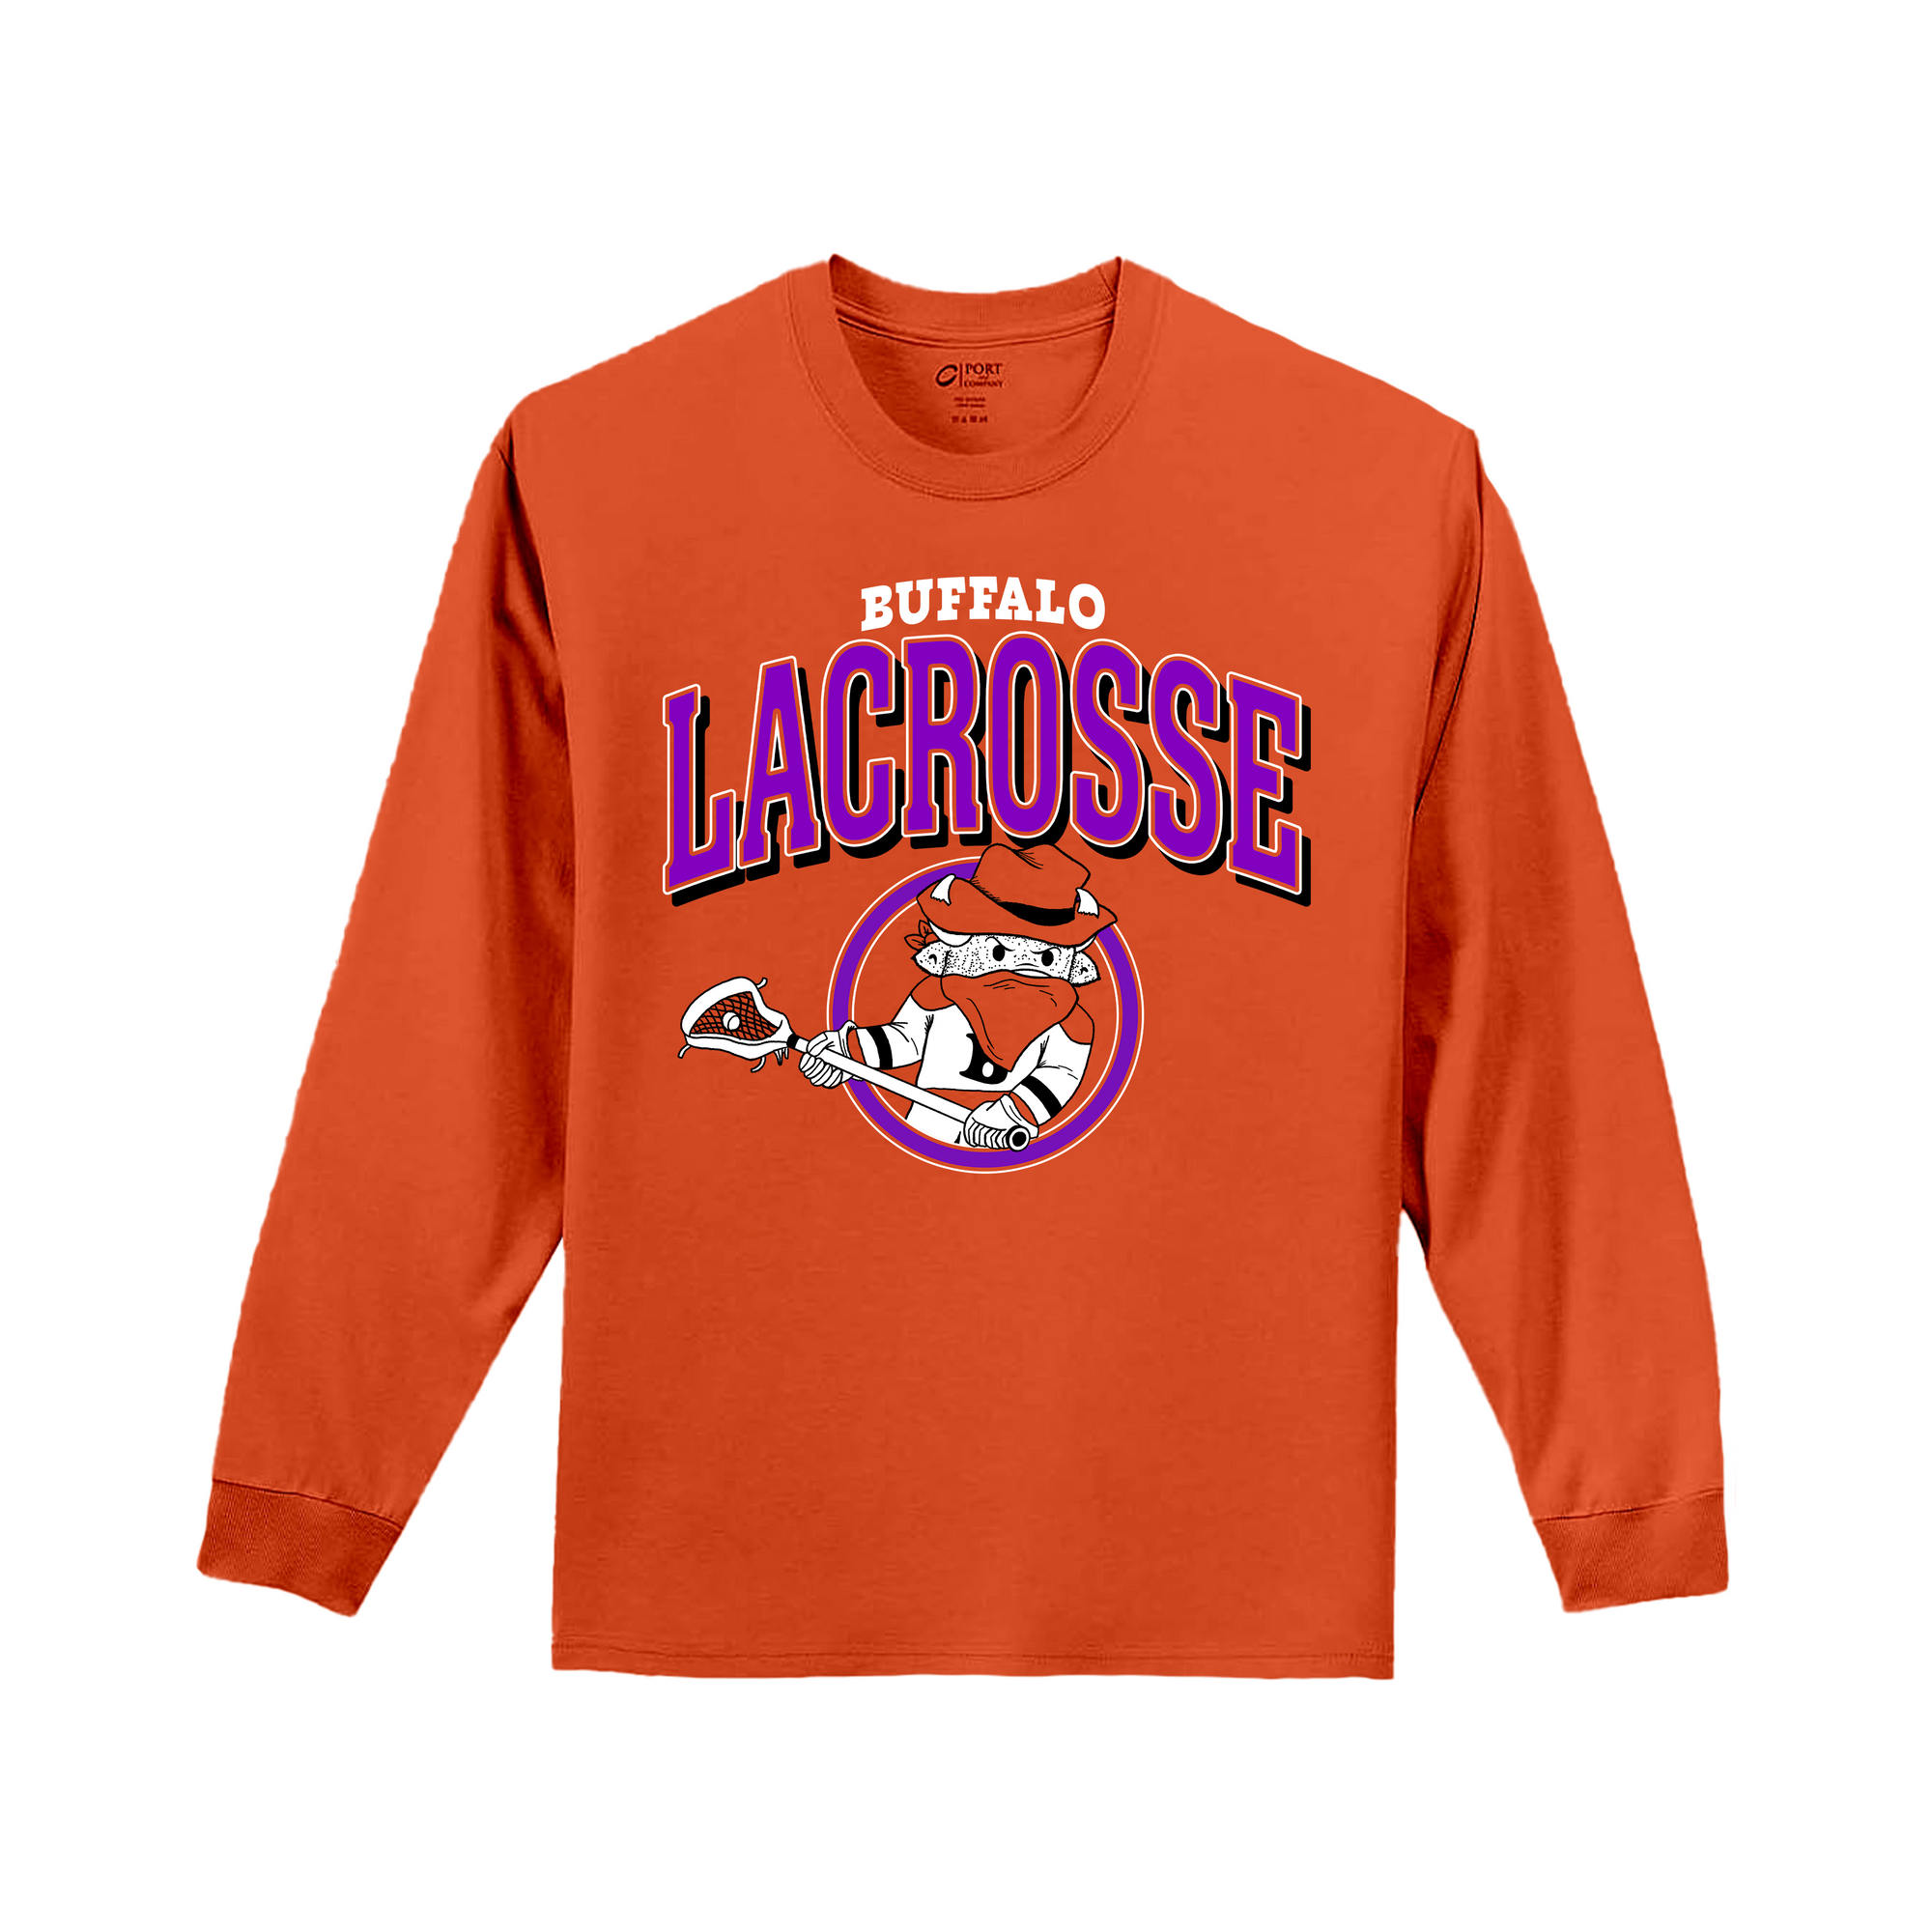 Youth Buffalo Lacrosse Orange Long Sleeve Shirt with a buffalo playing lacrosse drawing